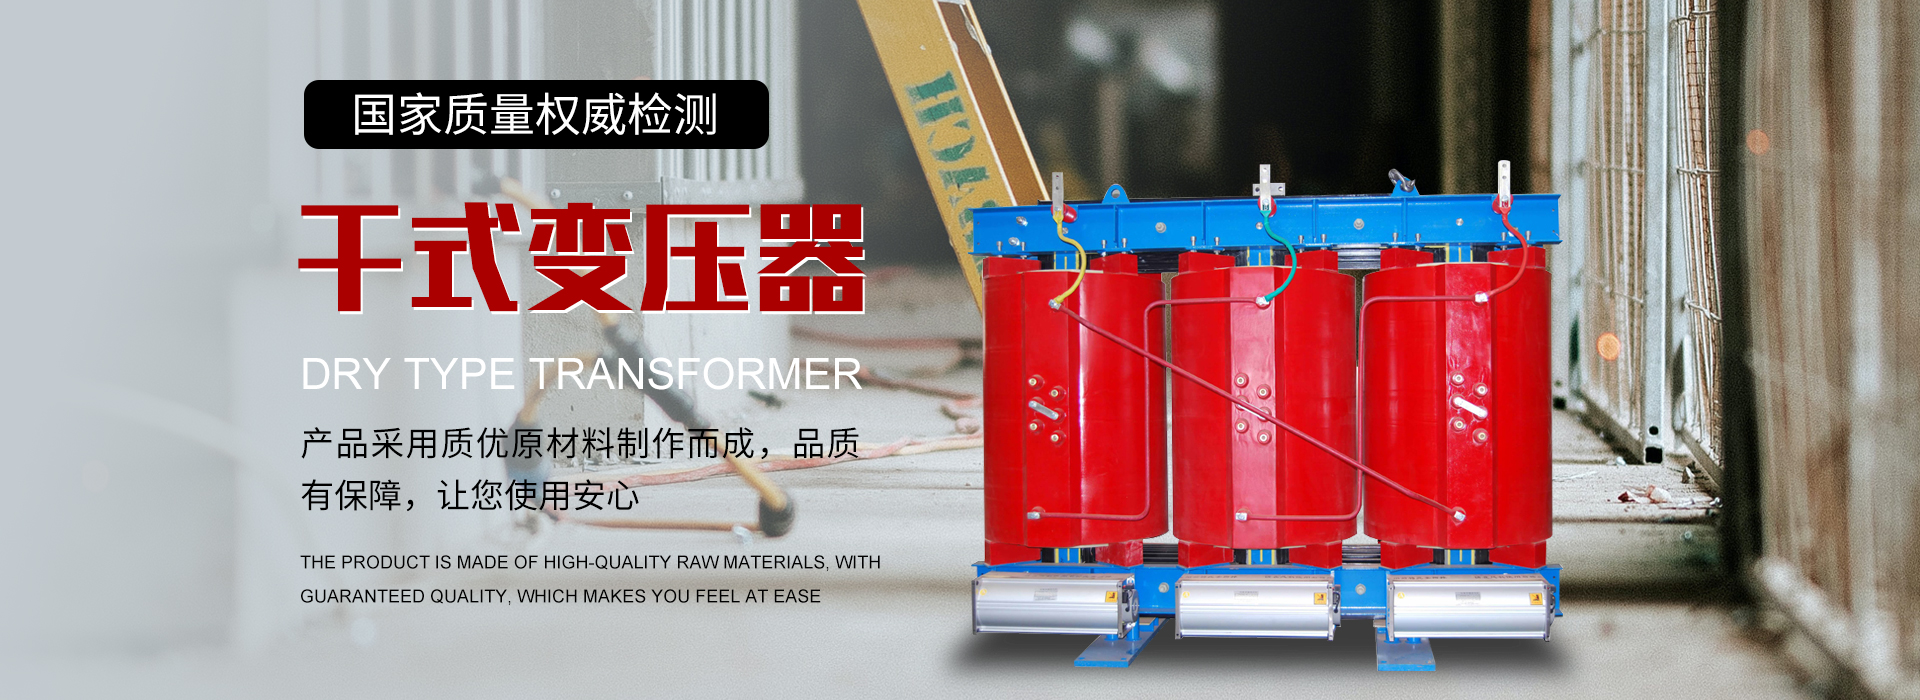 SCBH15三级干式变压器、北京本地SCBH15三级干式变压器、北京、北京SCBH15三级干式变压器